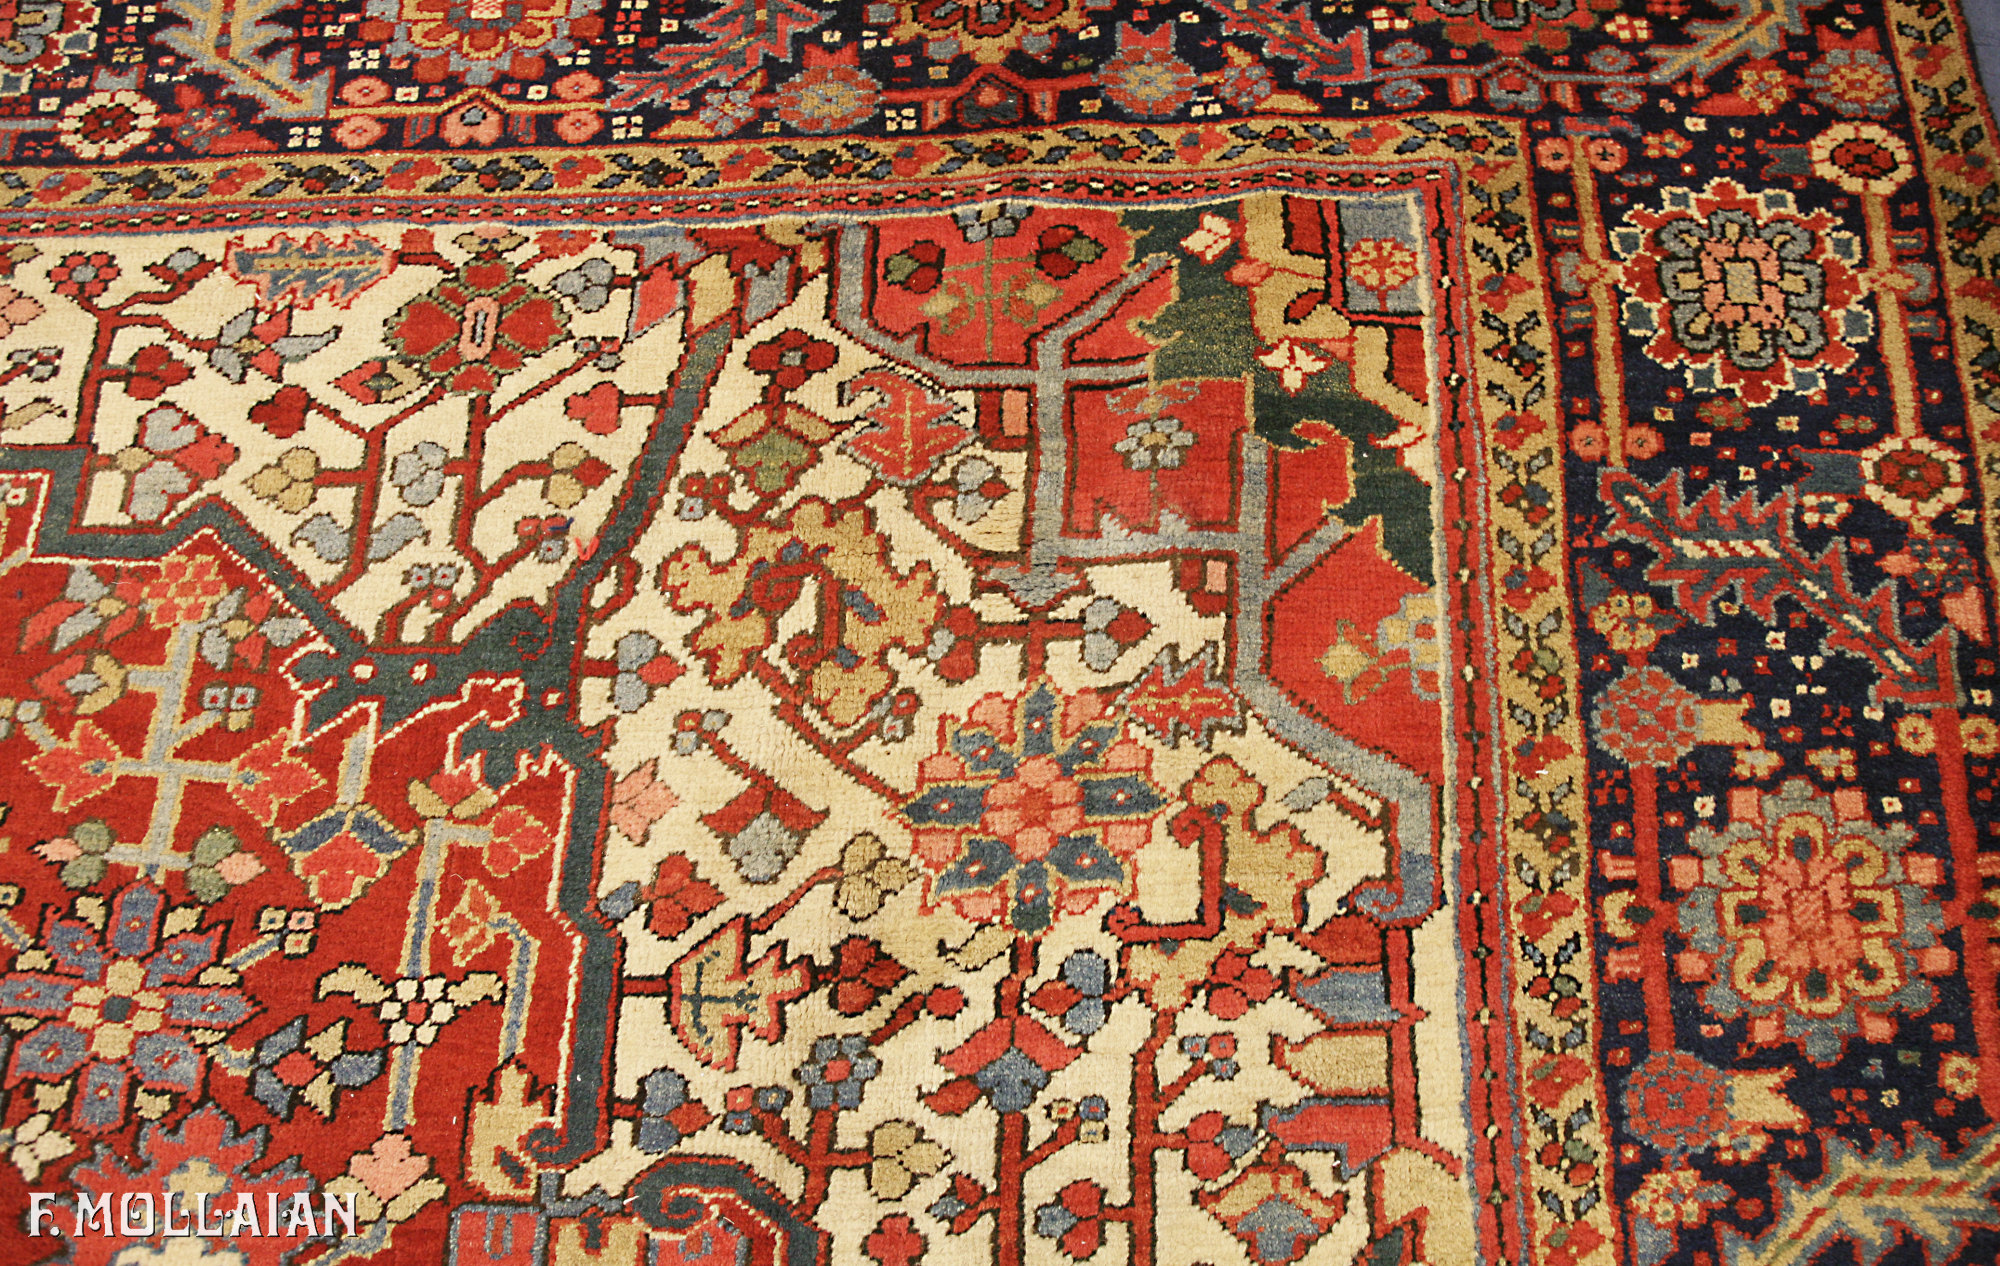 Antique Persian Heriz Rug n°:97080710